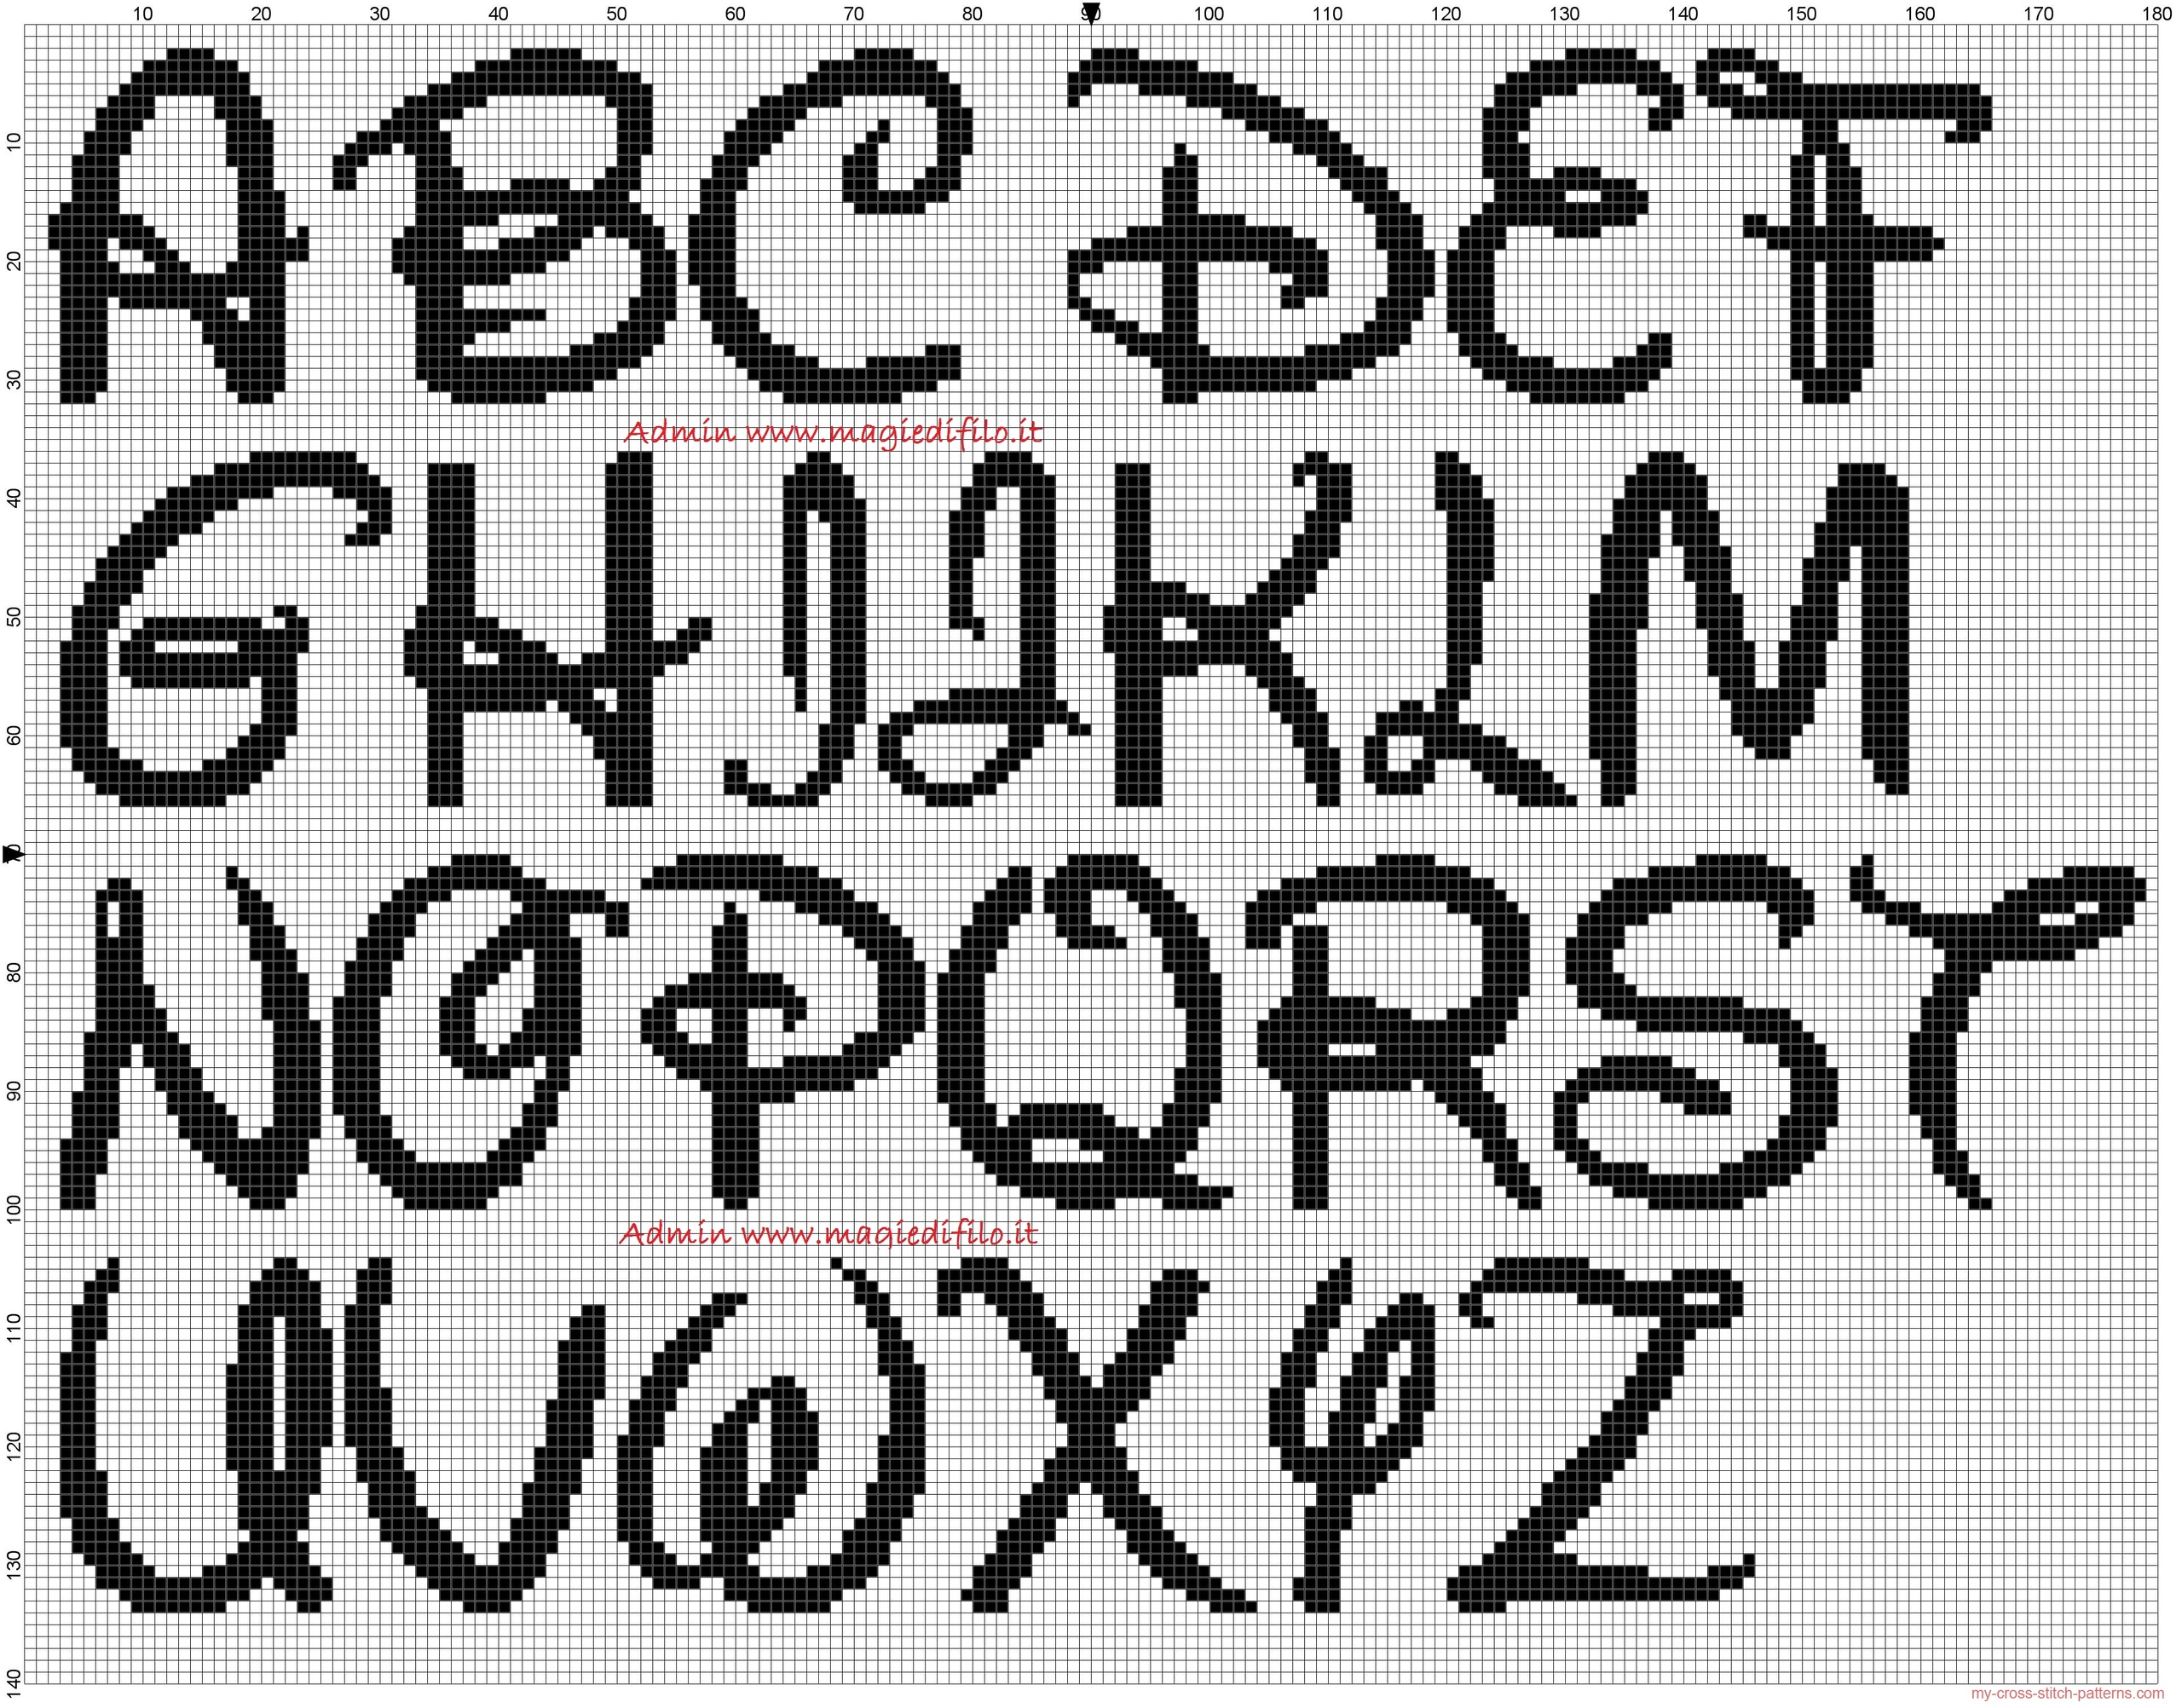 disney_alphabet_30x30_stitches_cross_stitch_pattern_free